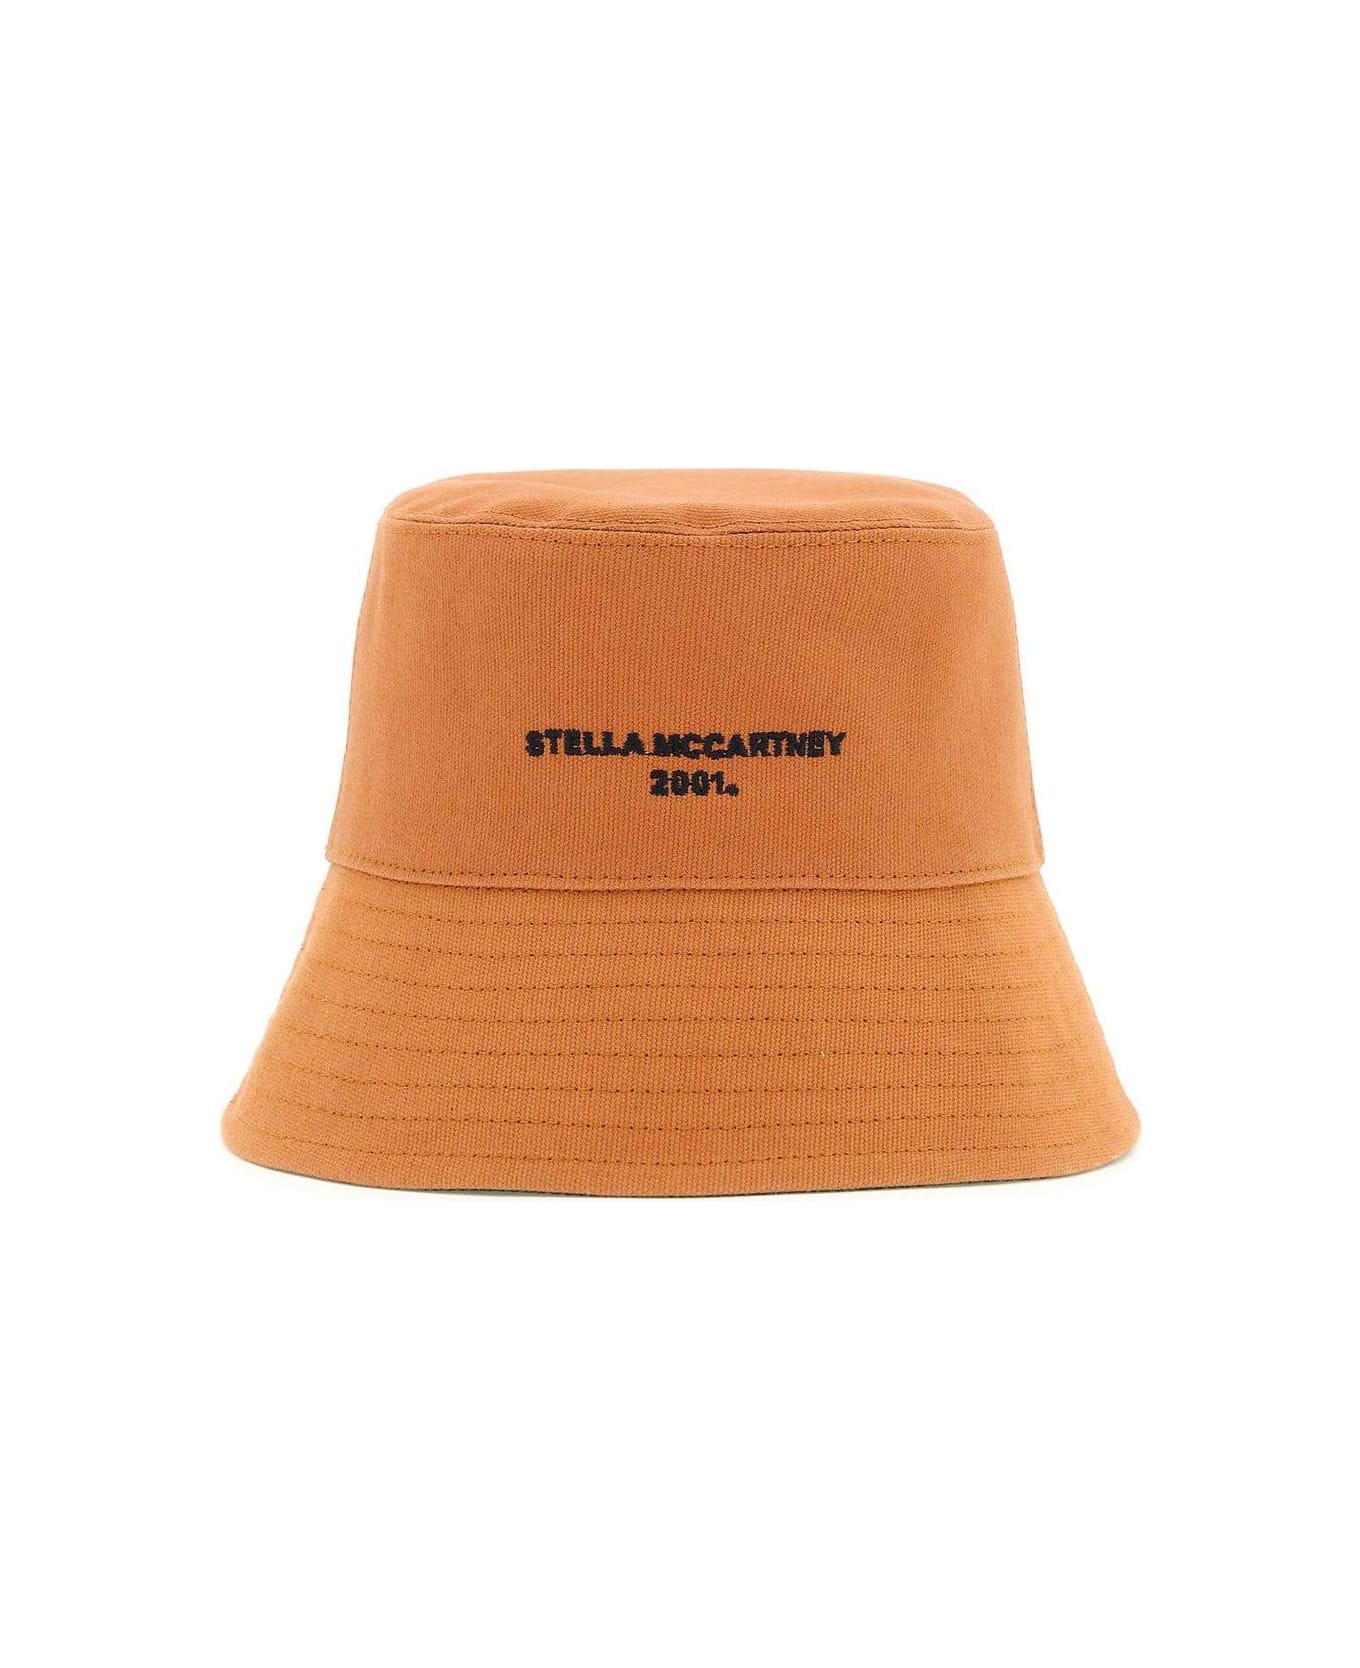 Stella McCartney Logo Embroidered Bucket Hat - Brown 帽子